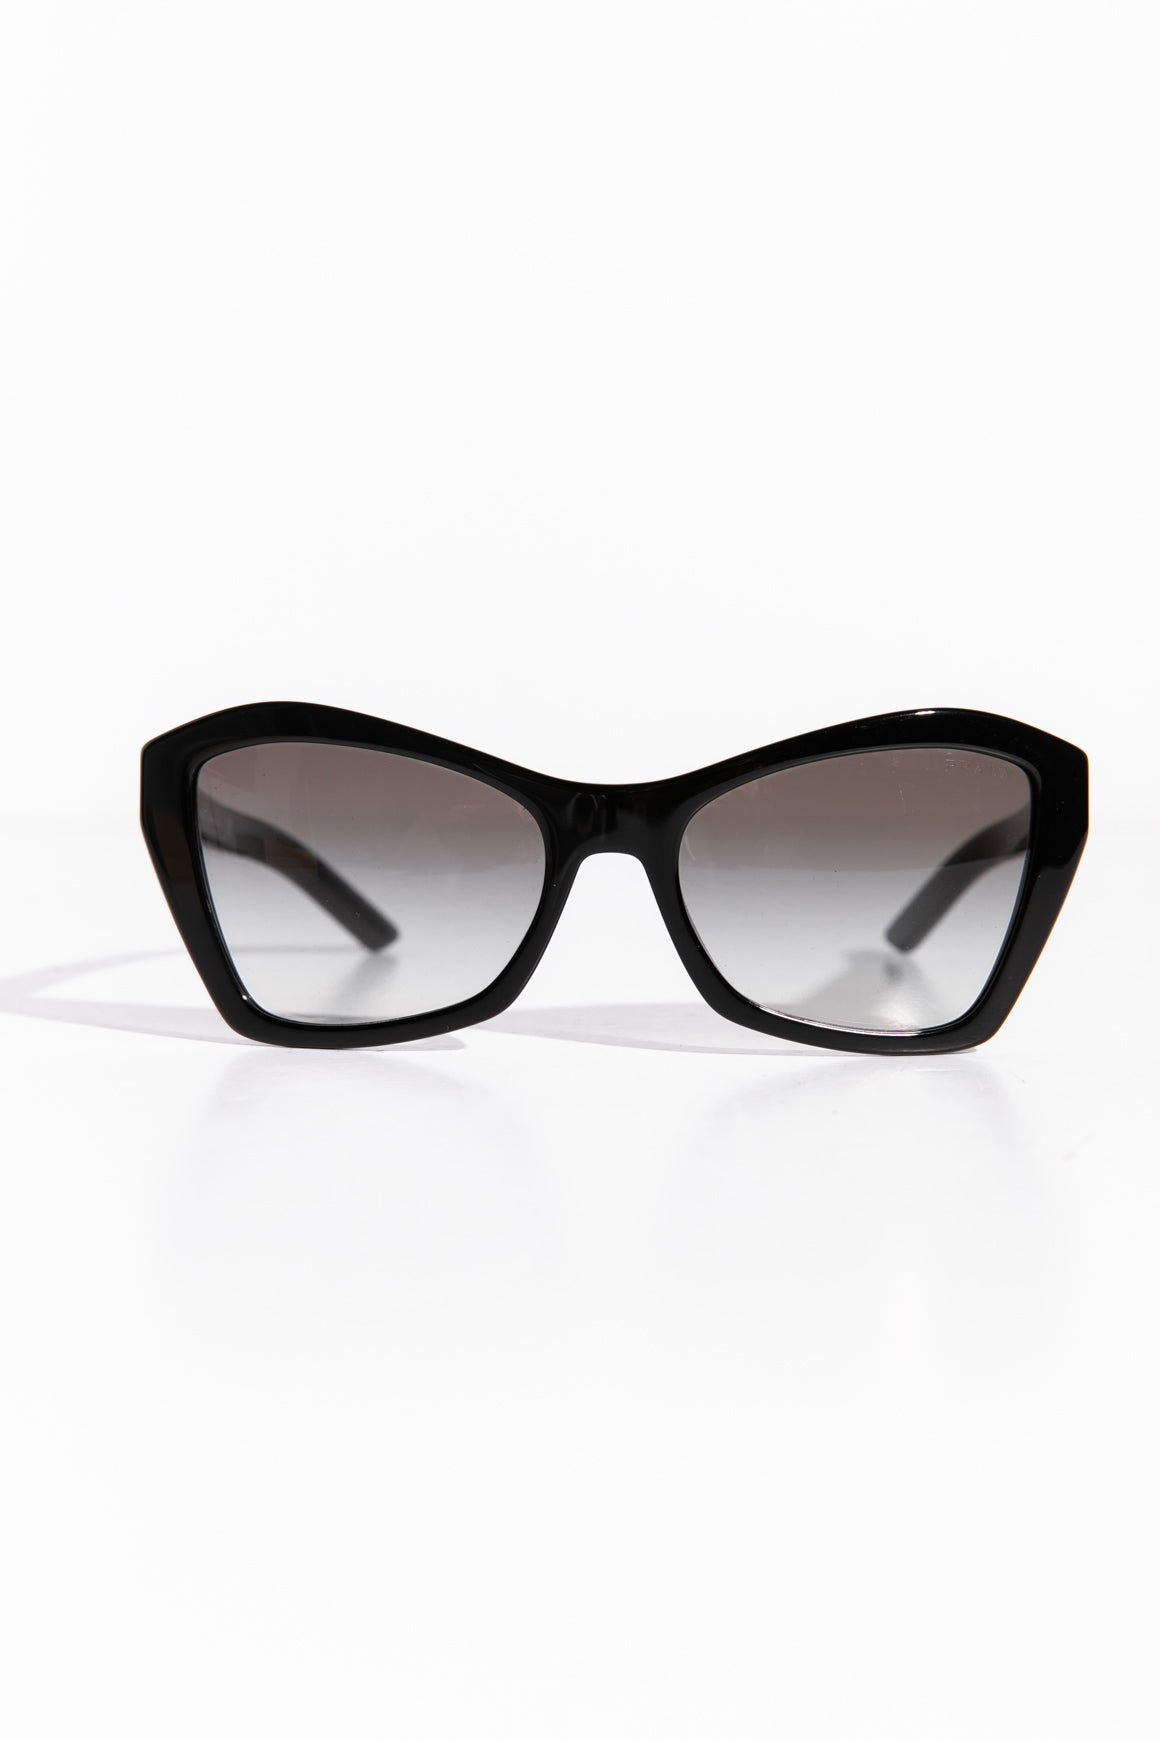 PRADA Black Cat Eye Sunglasses